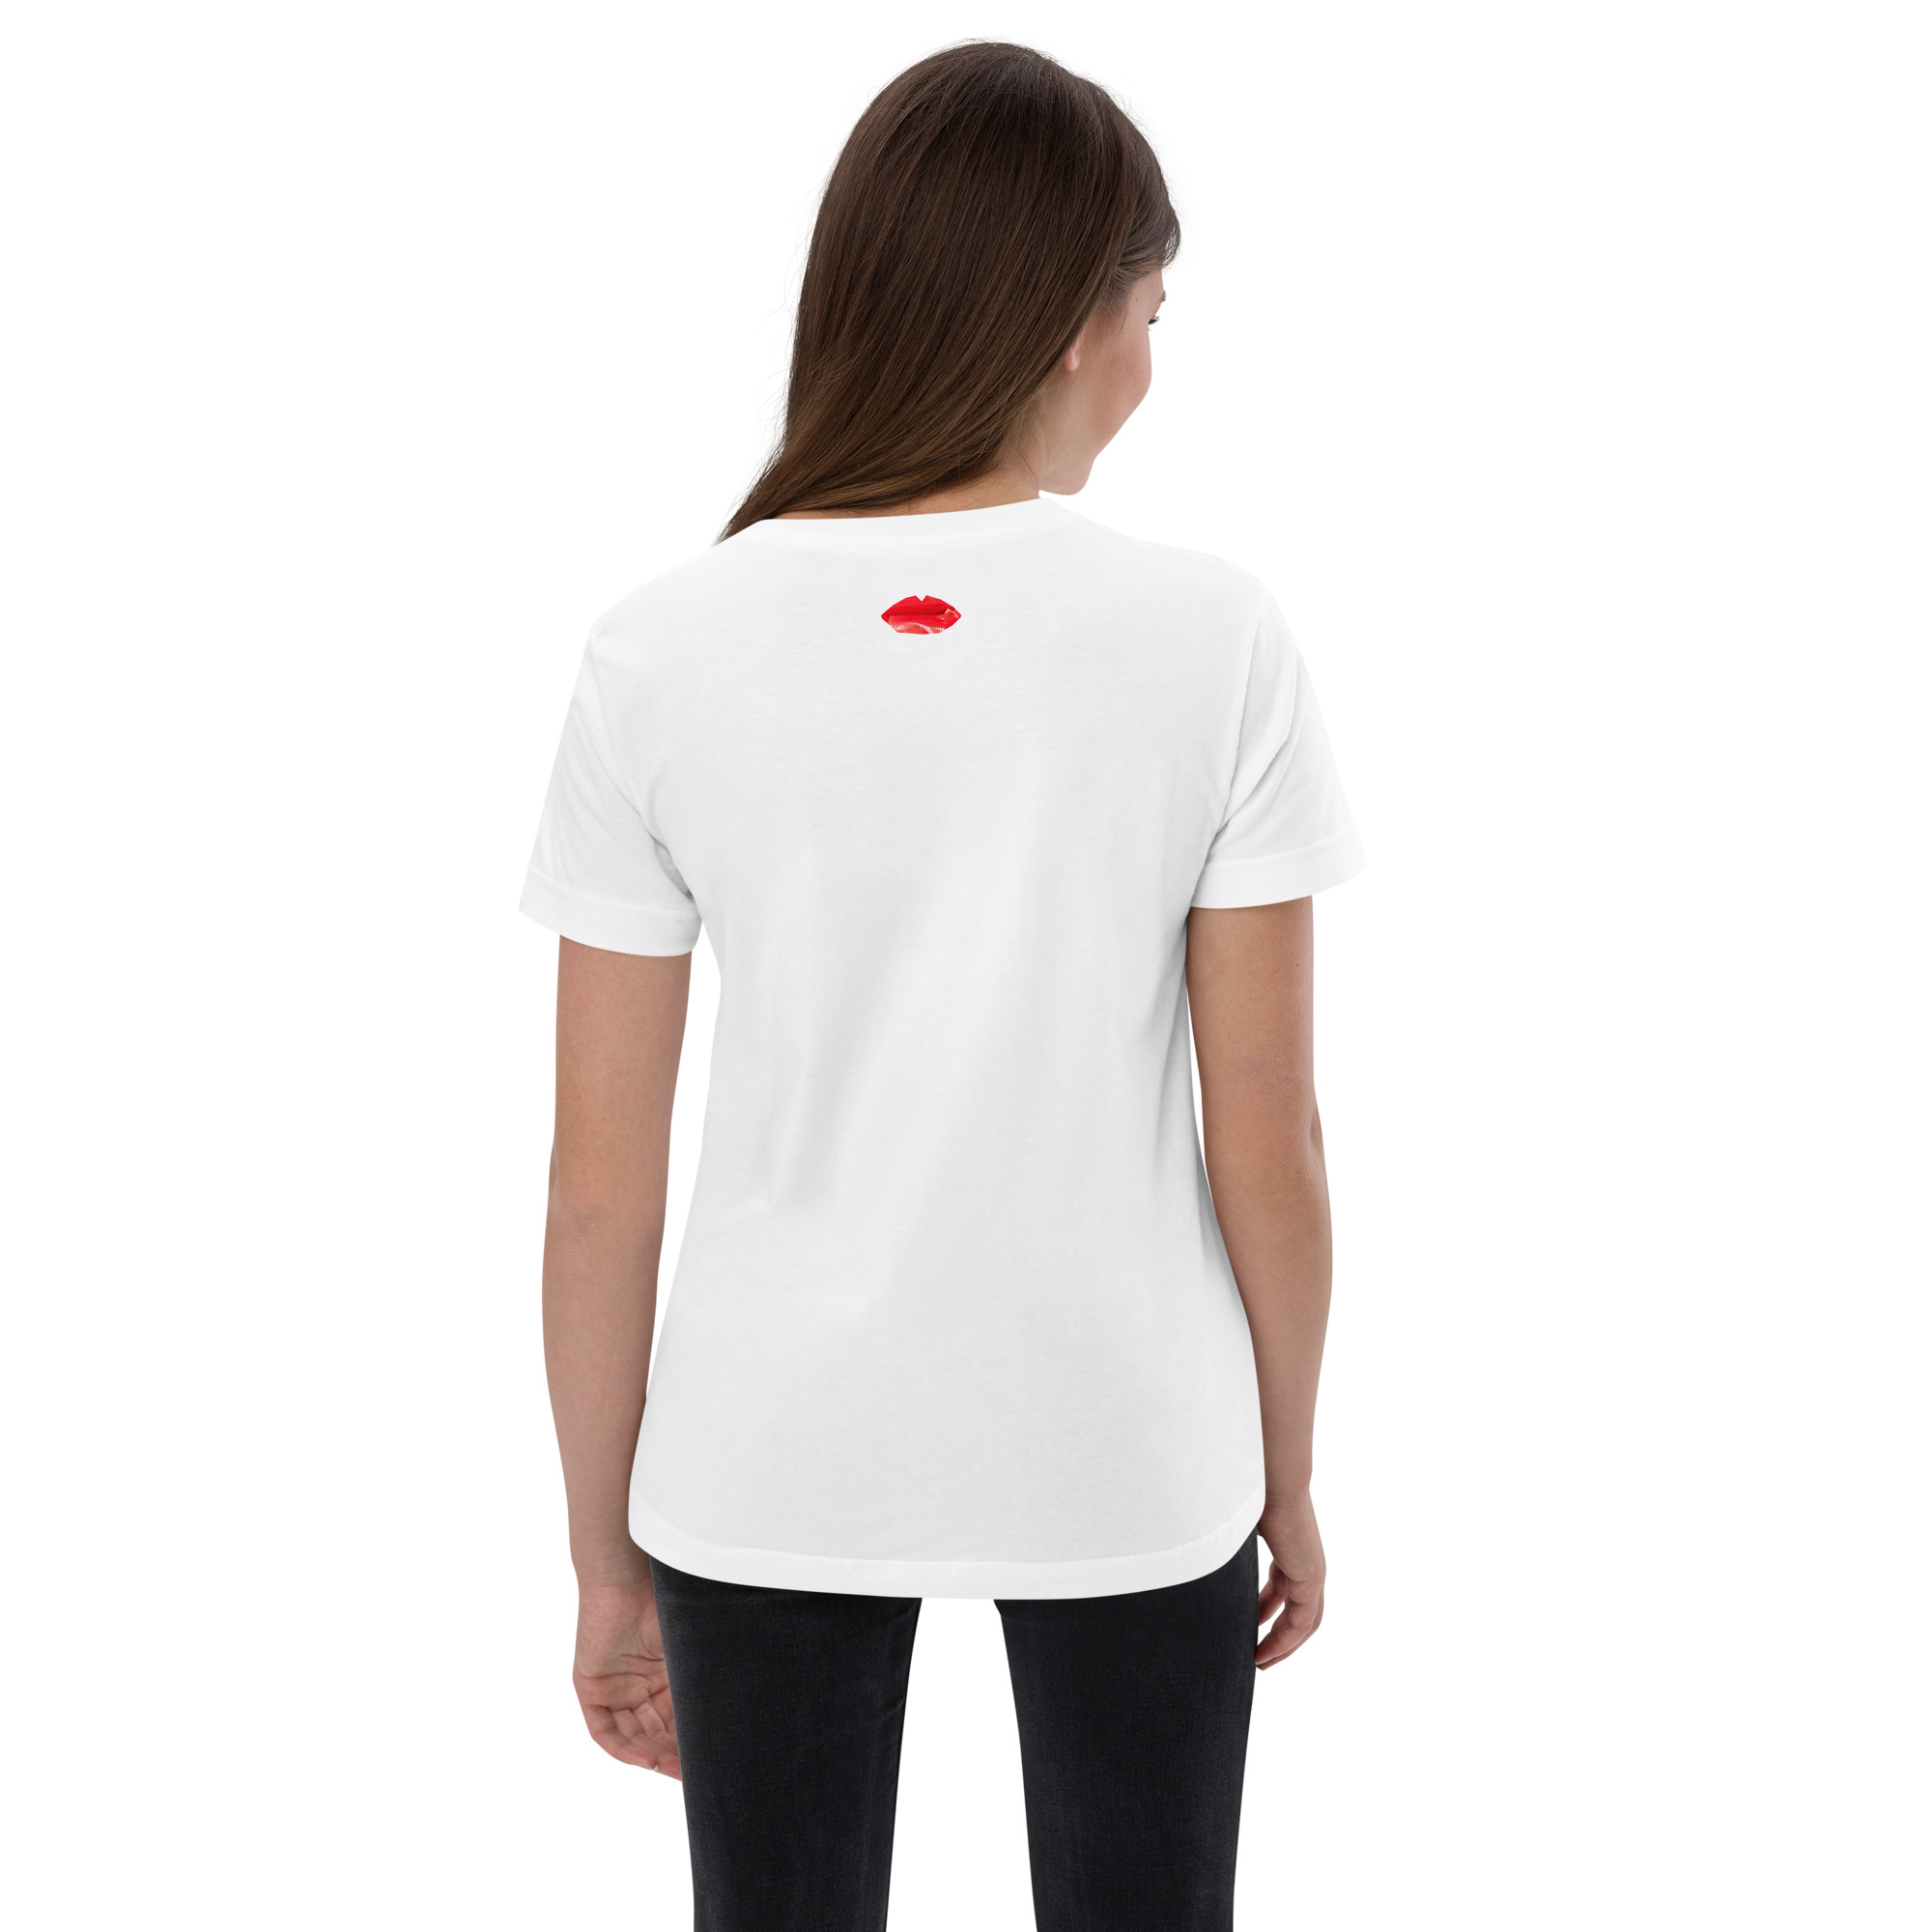 youth-jersey-t-shirt-white-back-6384cb2a1e78d.jpg